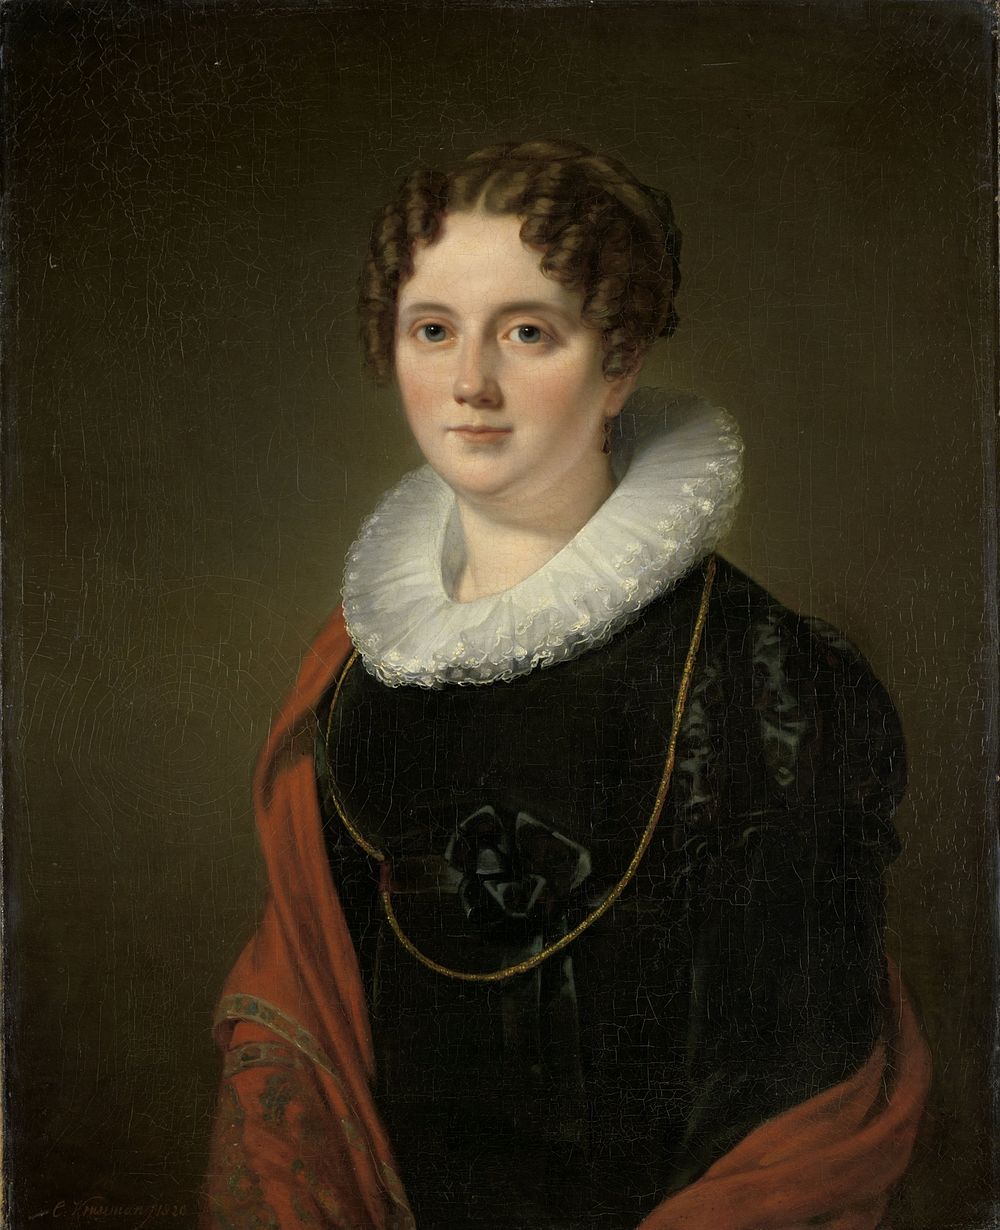 Marie Allebé-Herckenrath, Grandmother of the Painter August Allebé (1820) by Cornelis Kruseman